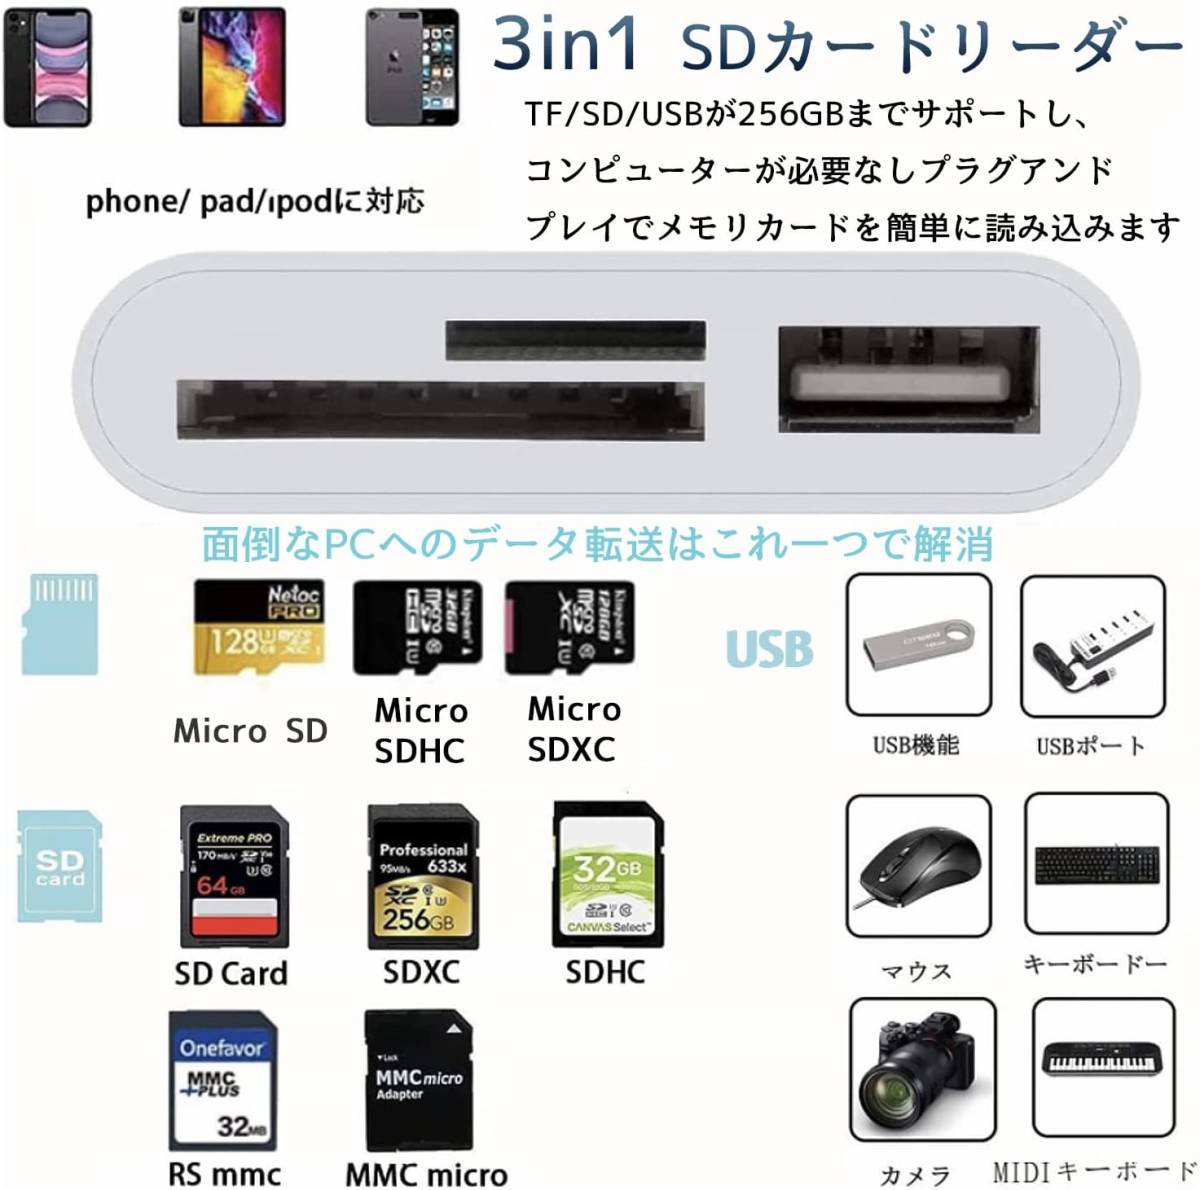 【Grace nnvg最新型改良】i-Phone SD カードリーダー 3in1 SDカードリーダー USB3.0カメラアダプタ3in1高速データ転送_画像10